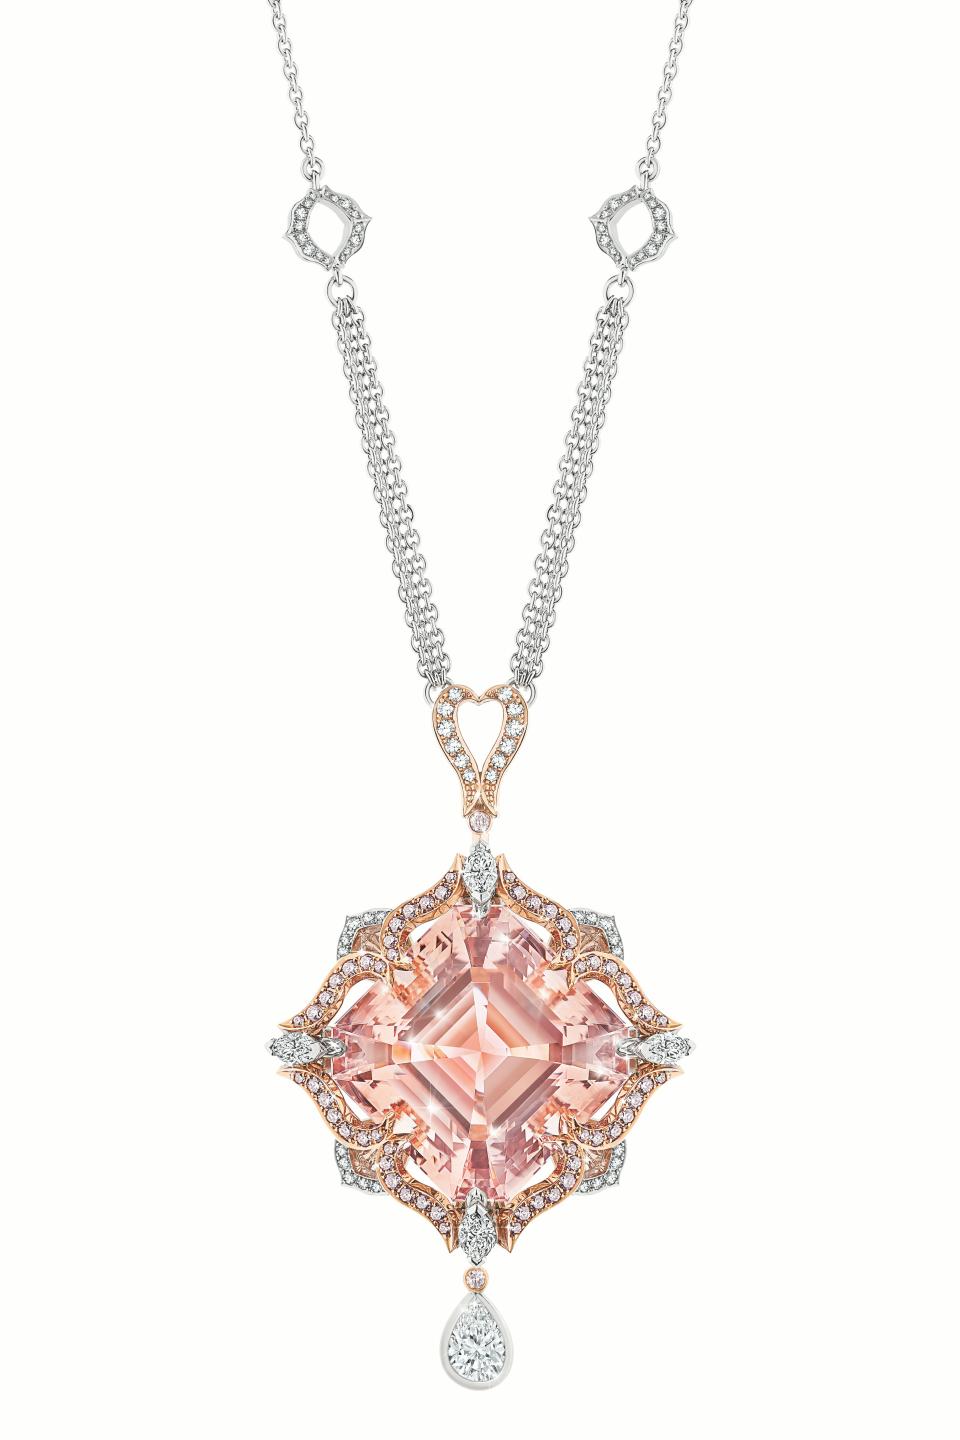 Calleija Leilani white and rose gold, morganite, pink and white diamond pendant